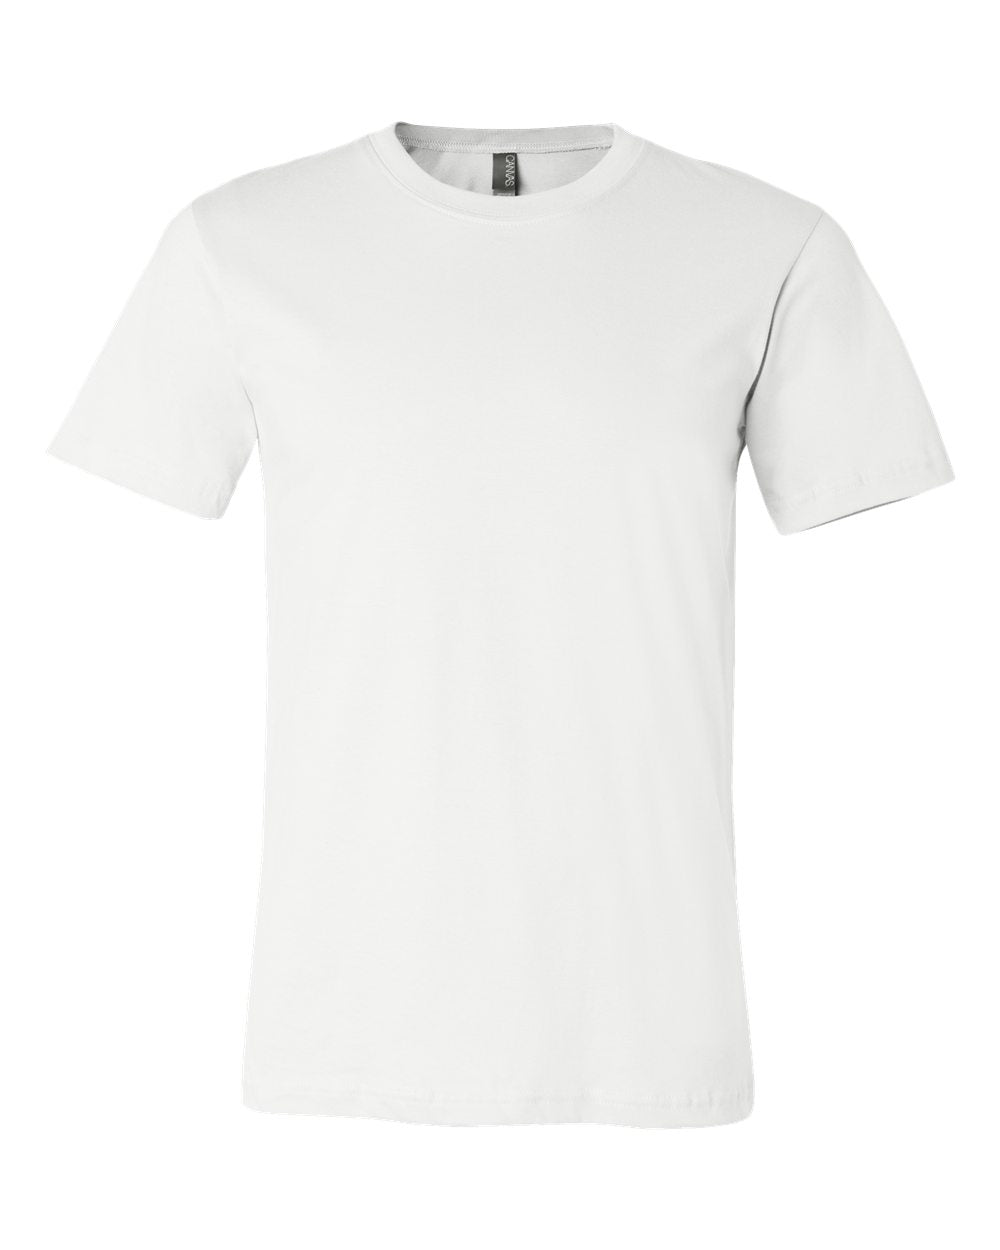 Vernon Design 23 T-Shirt